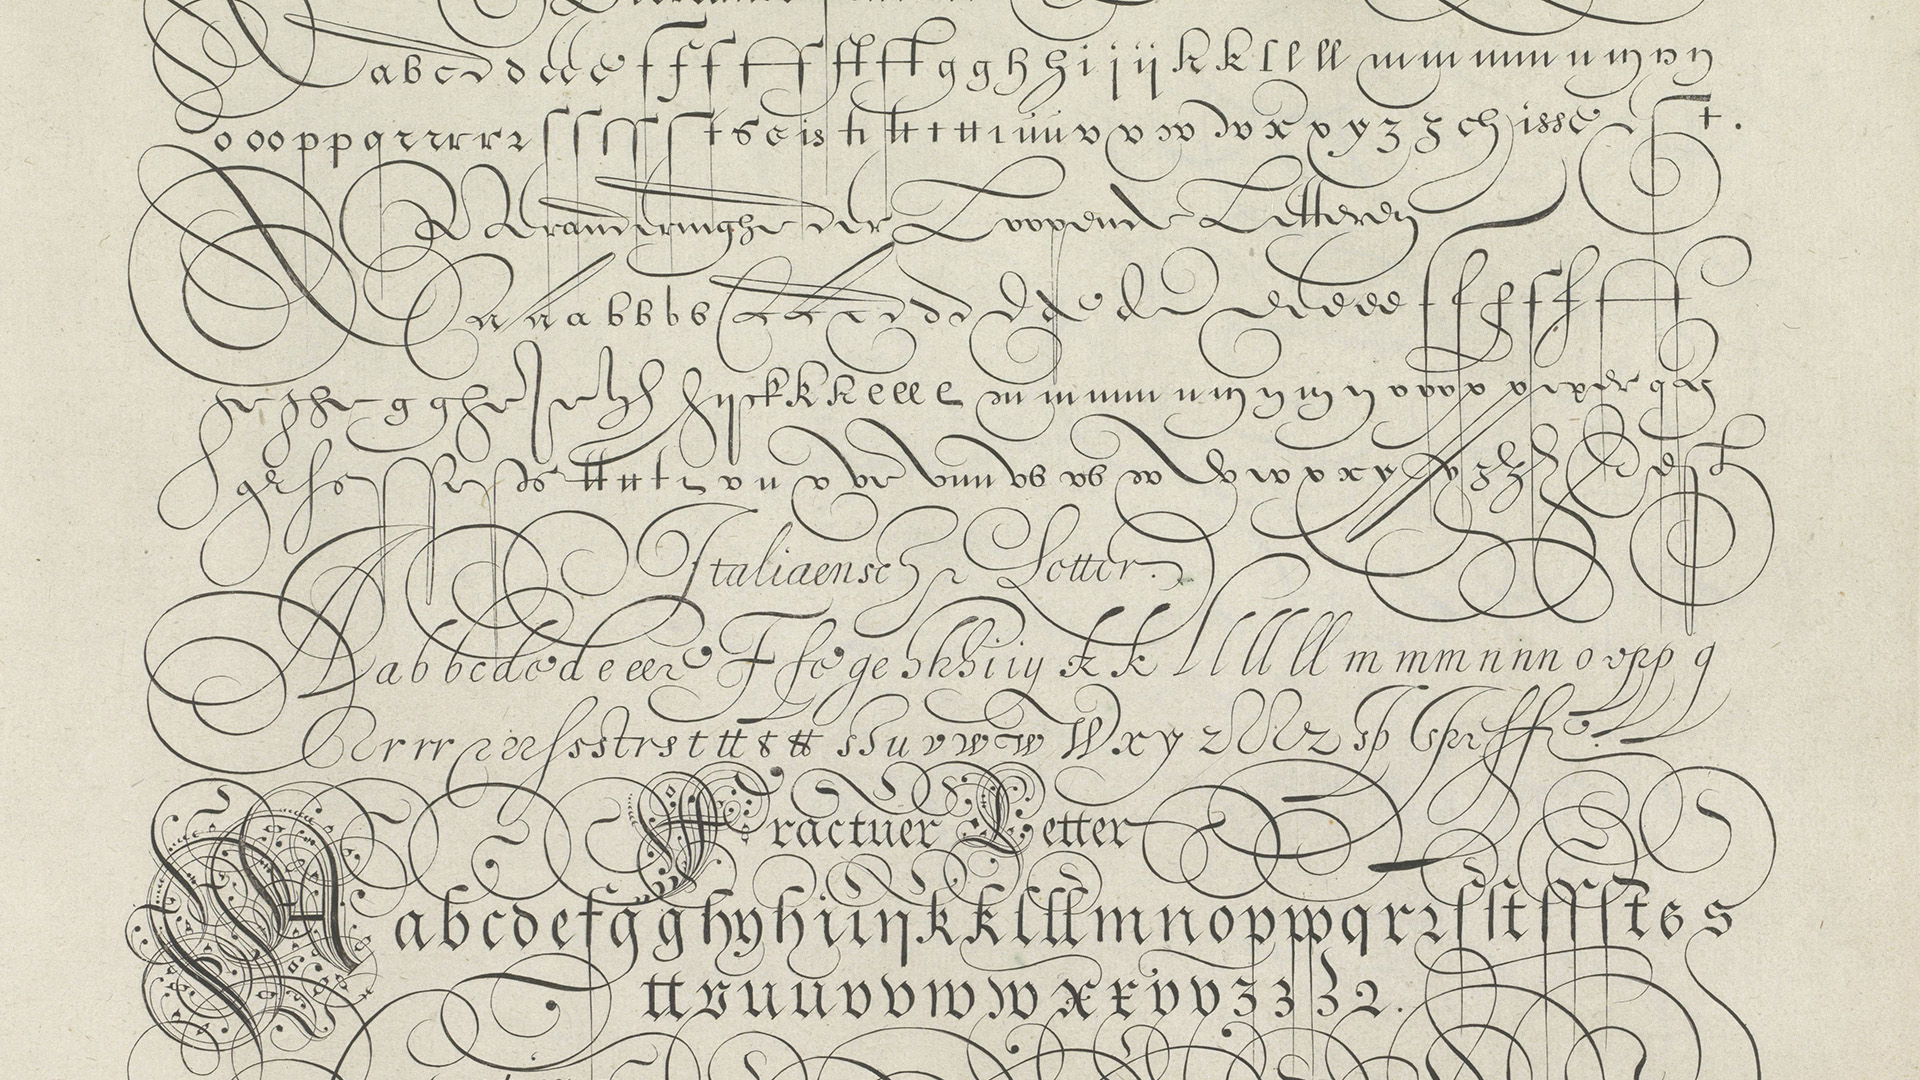 calligraphy writing samples alphabet